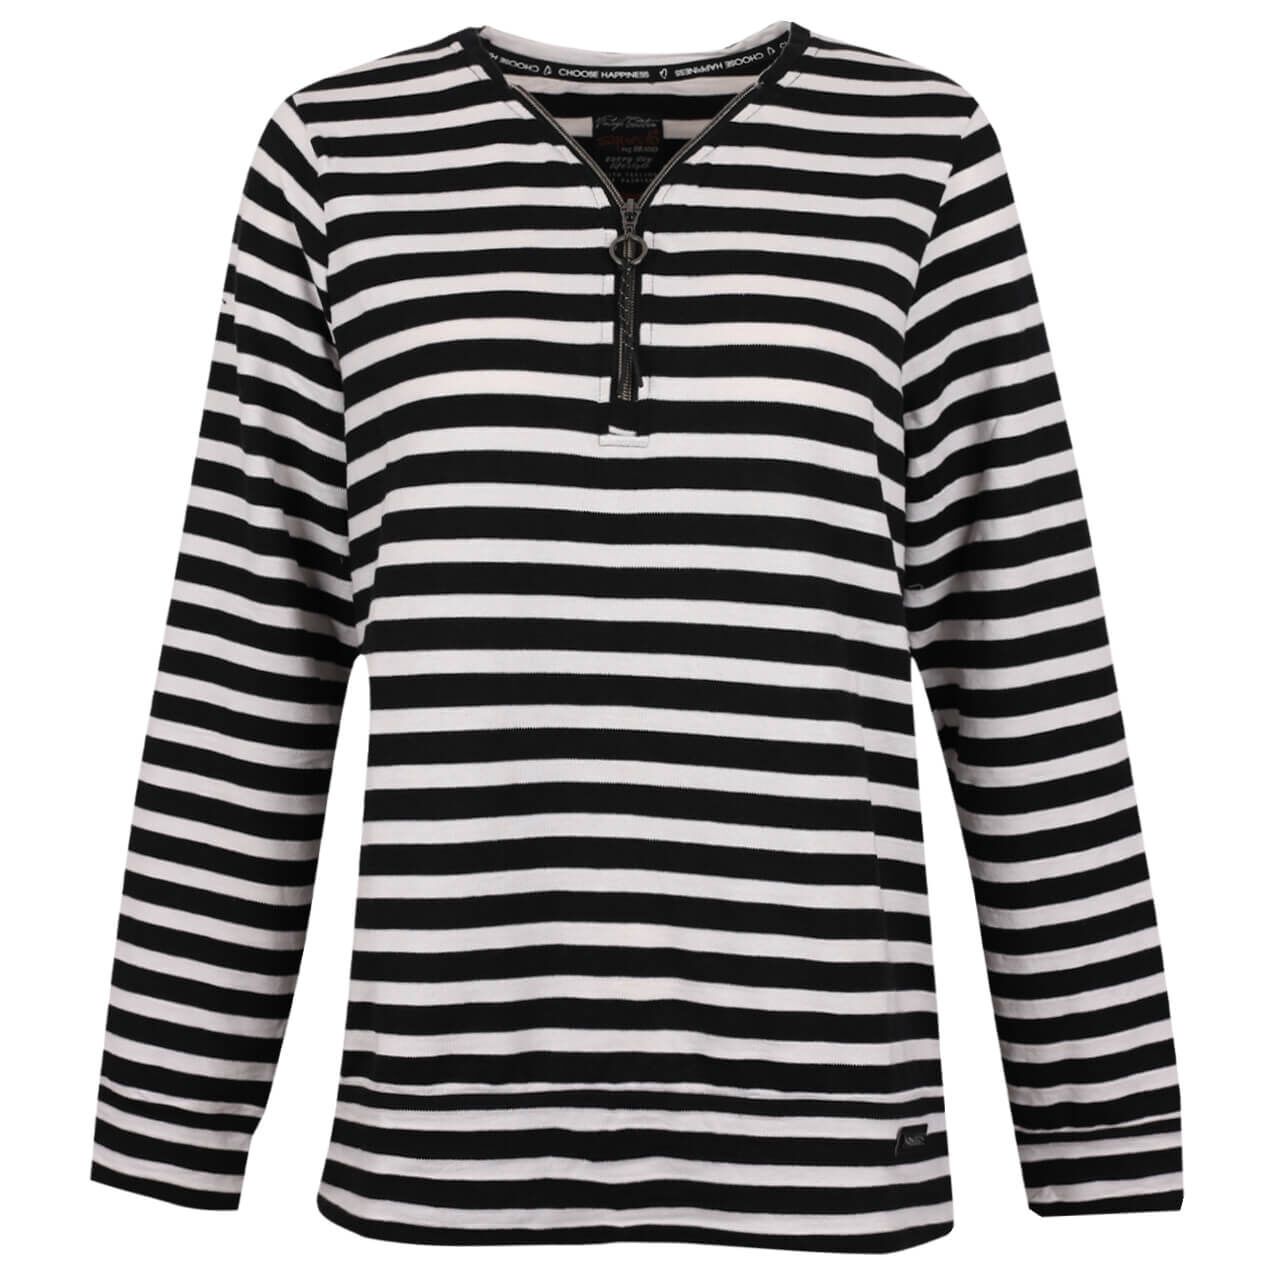 Soquesto Damen Langarm Shirt black white stripes